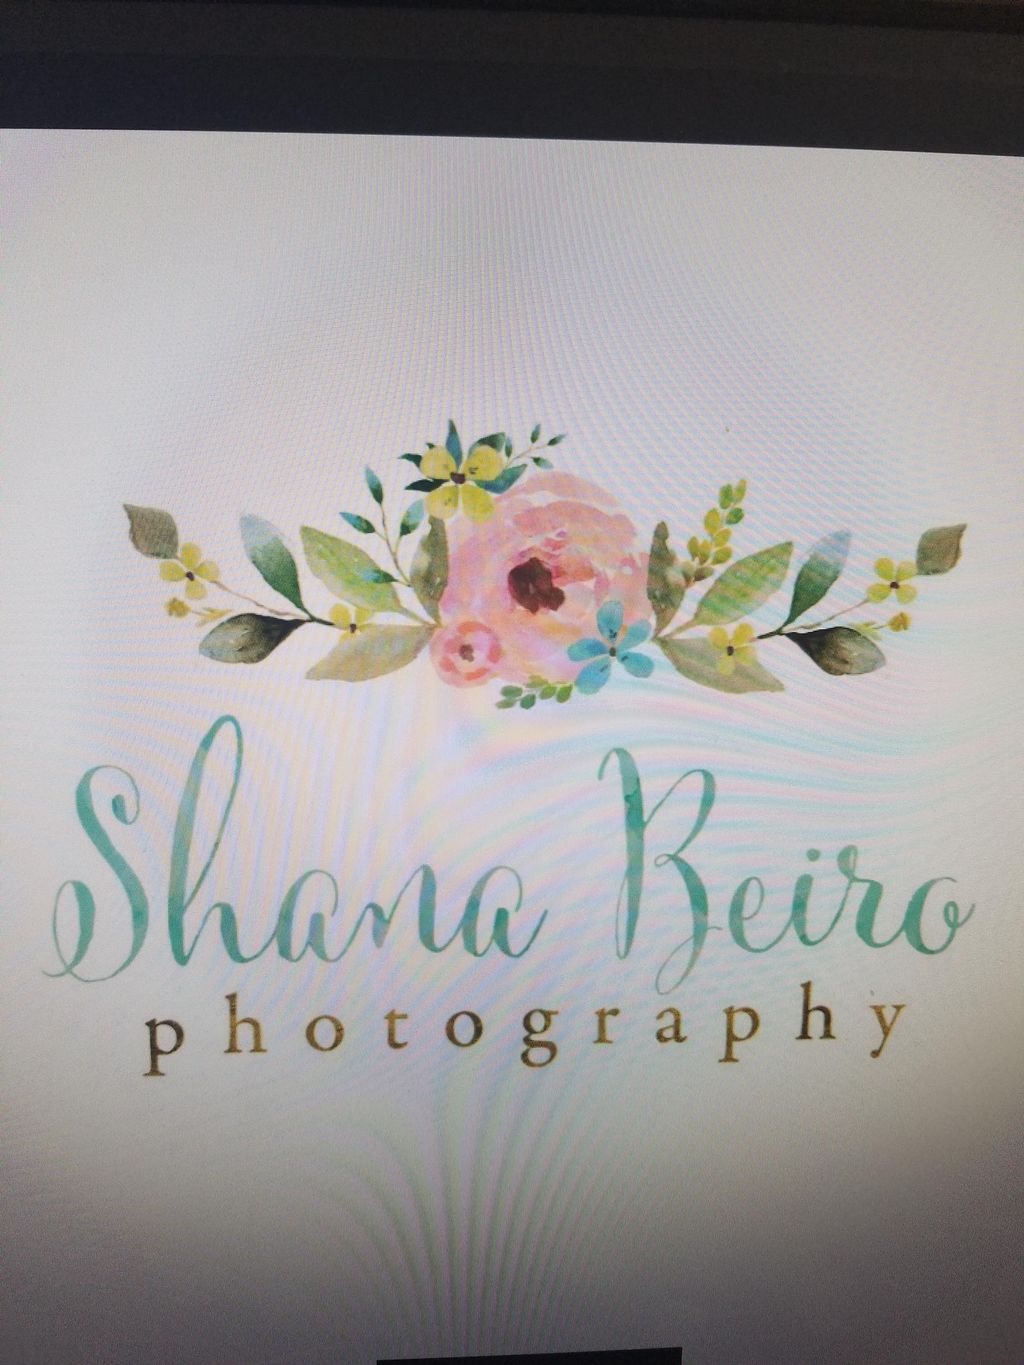 Shana Beiro Photography, LLC